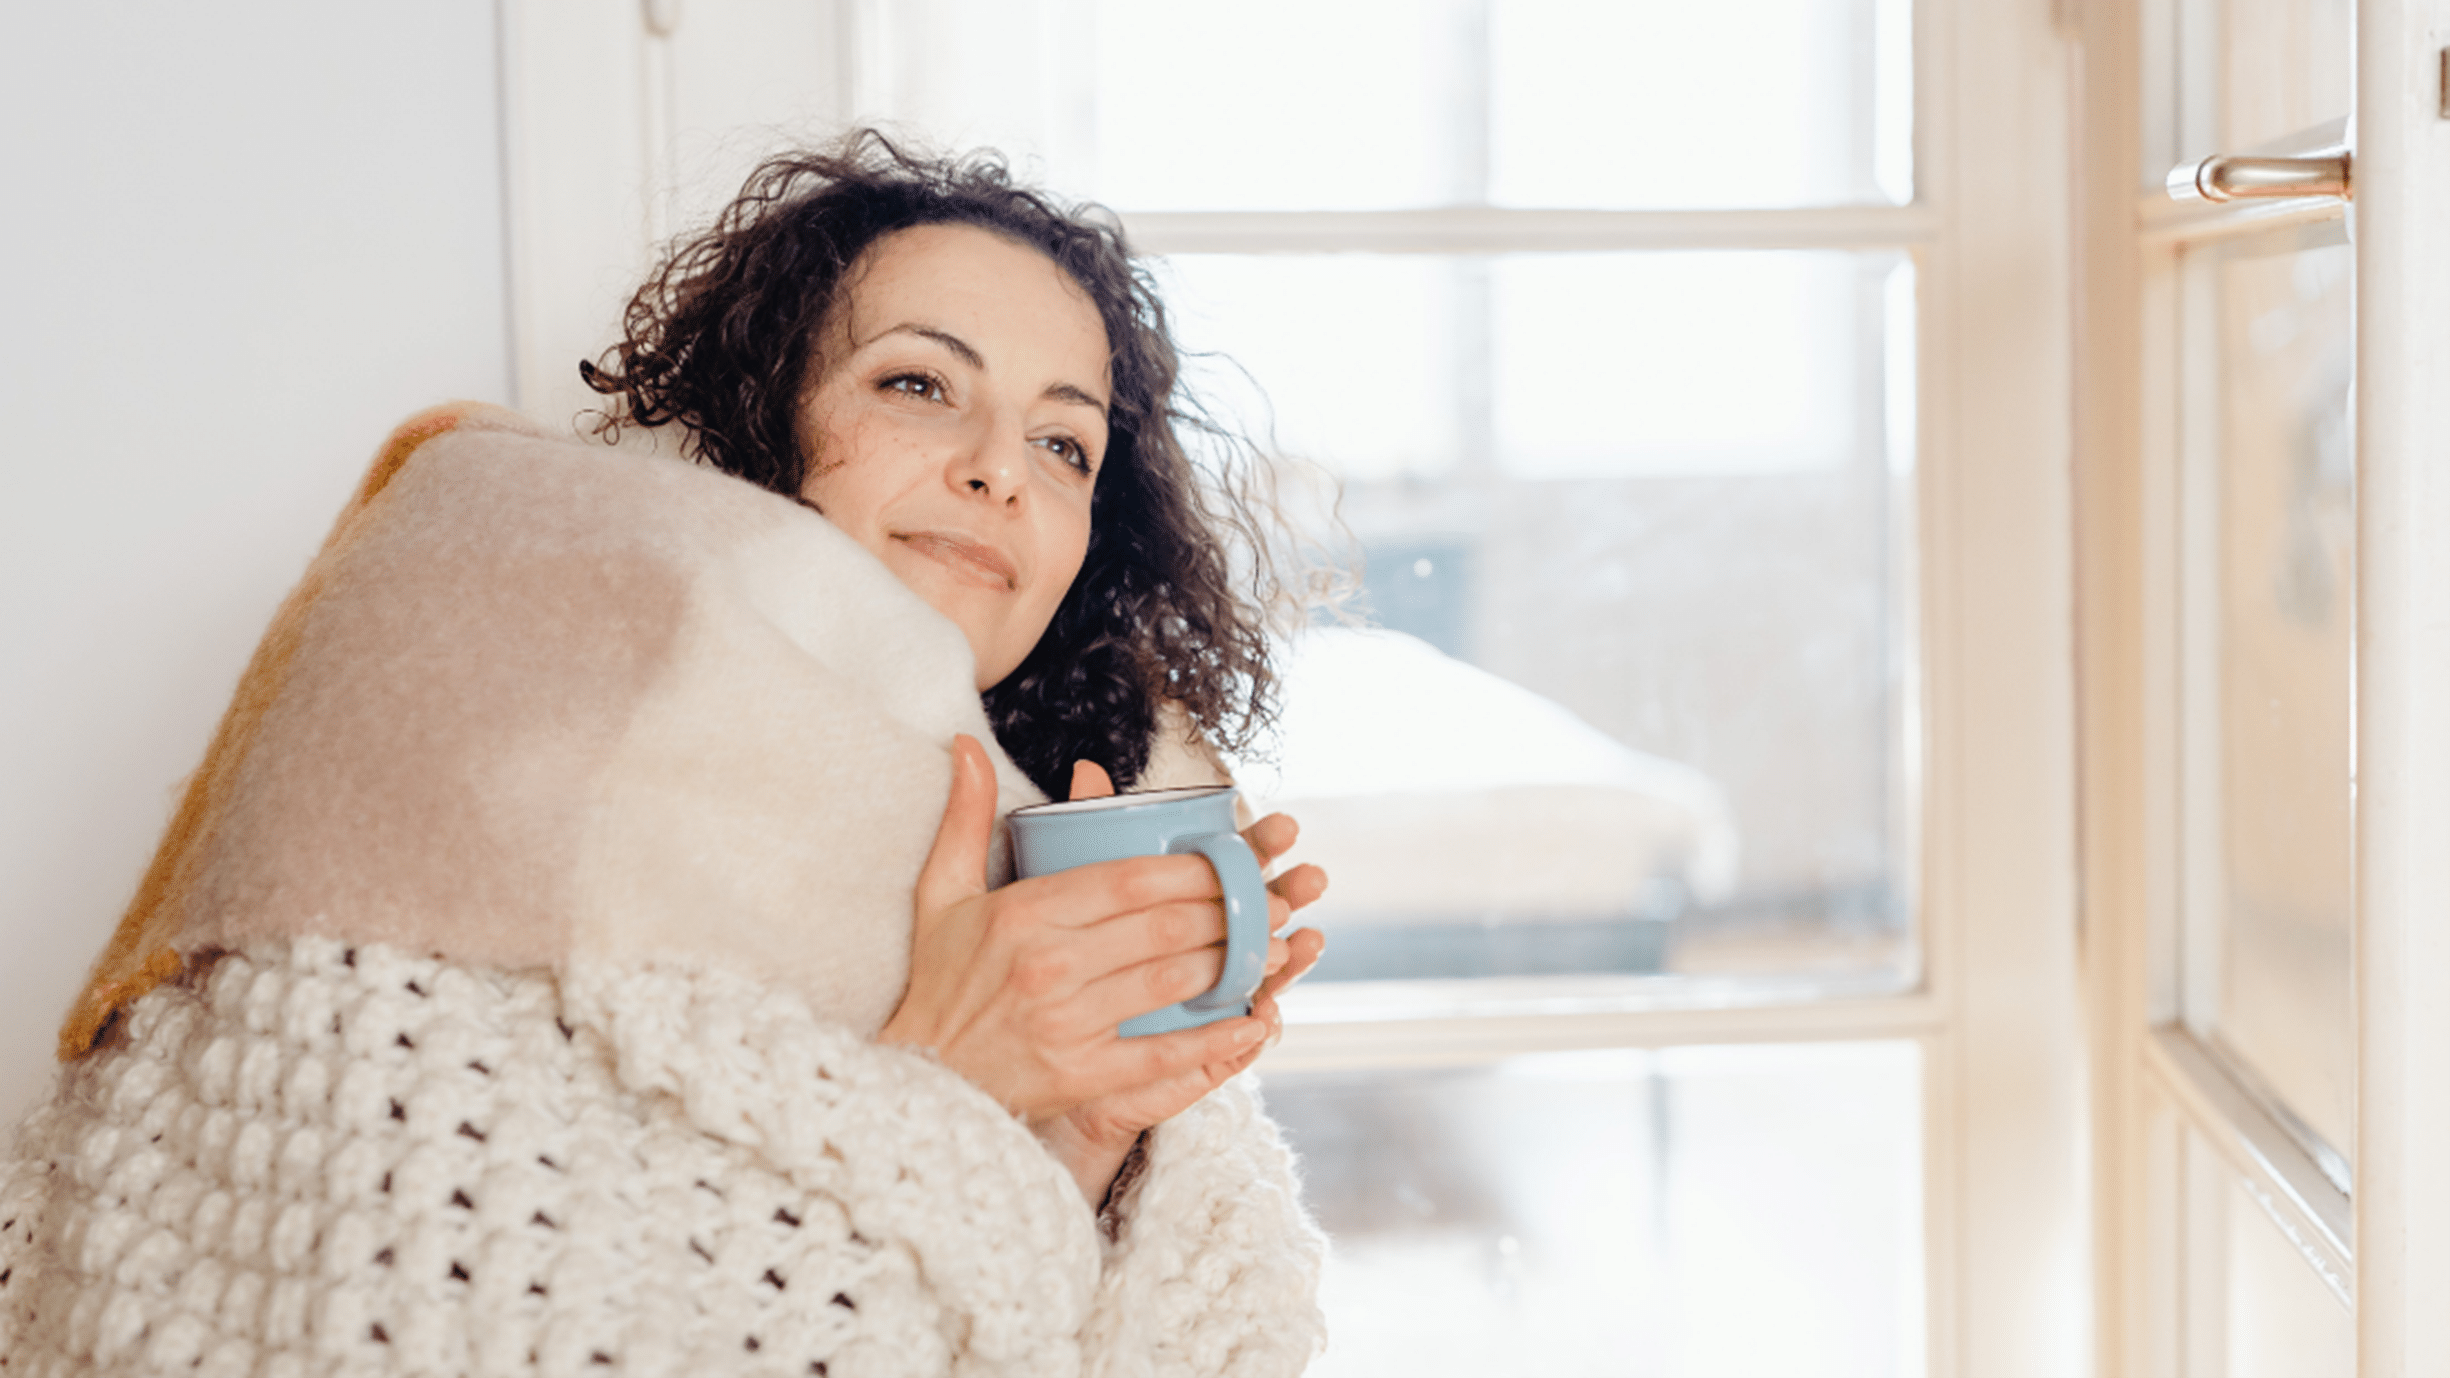 Woman snuggled next to window in blanket holding mug